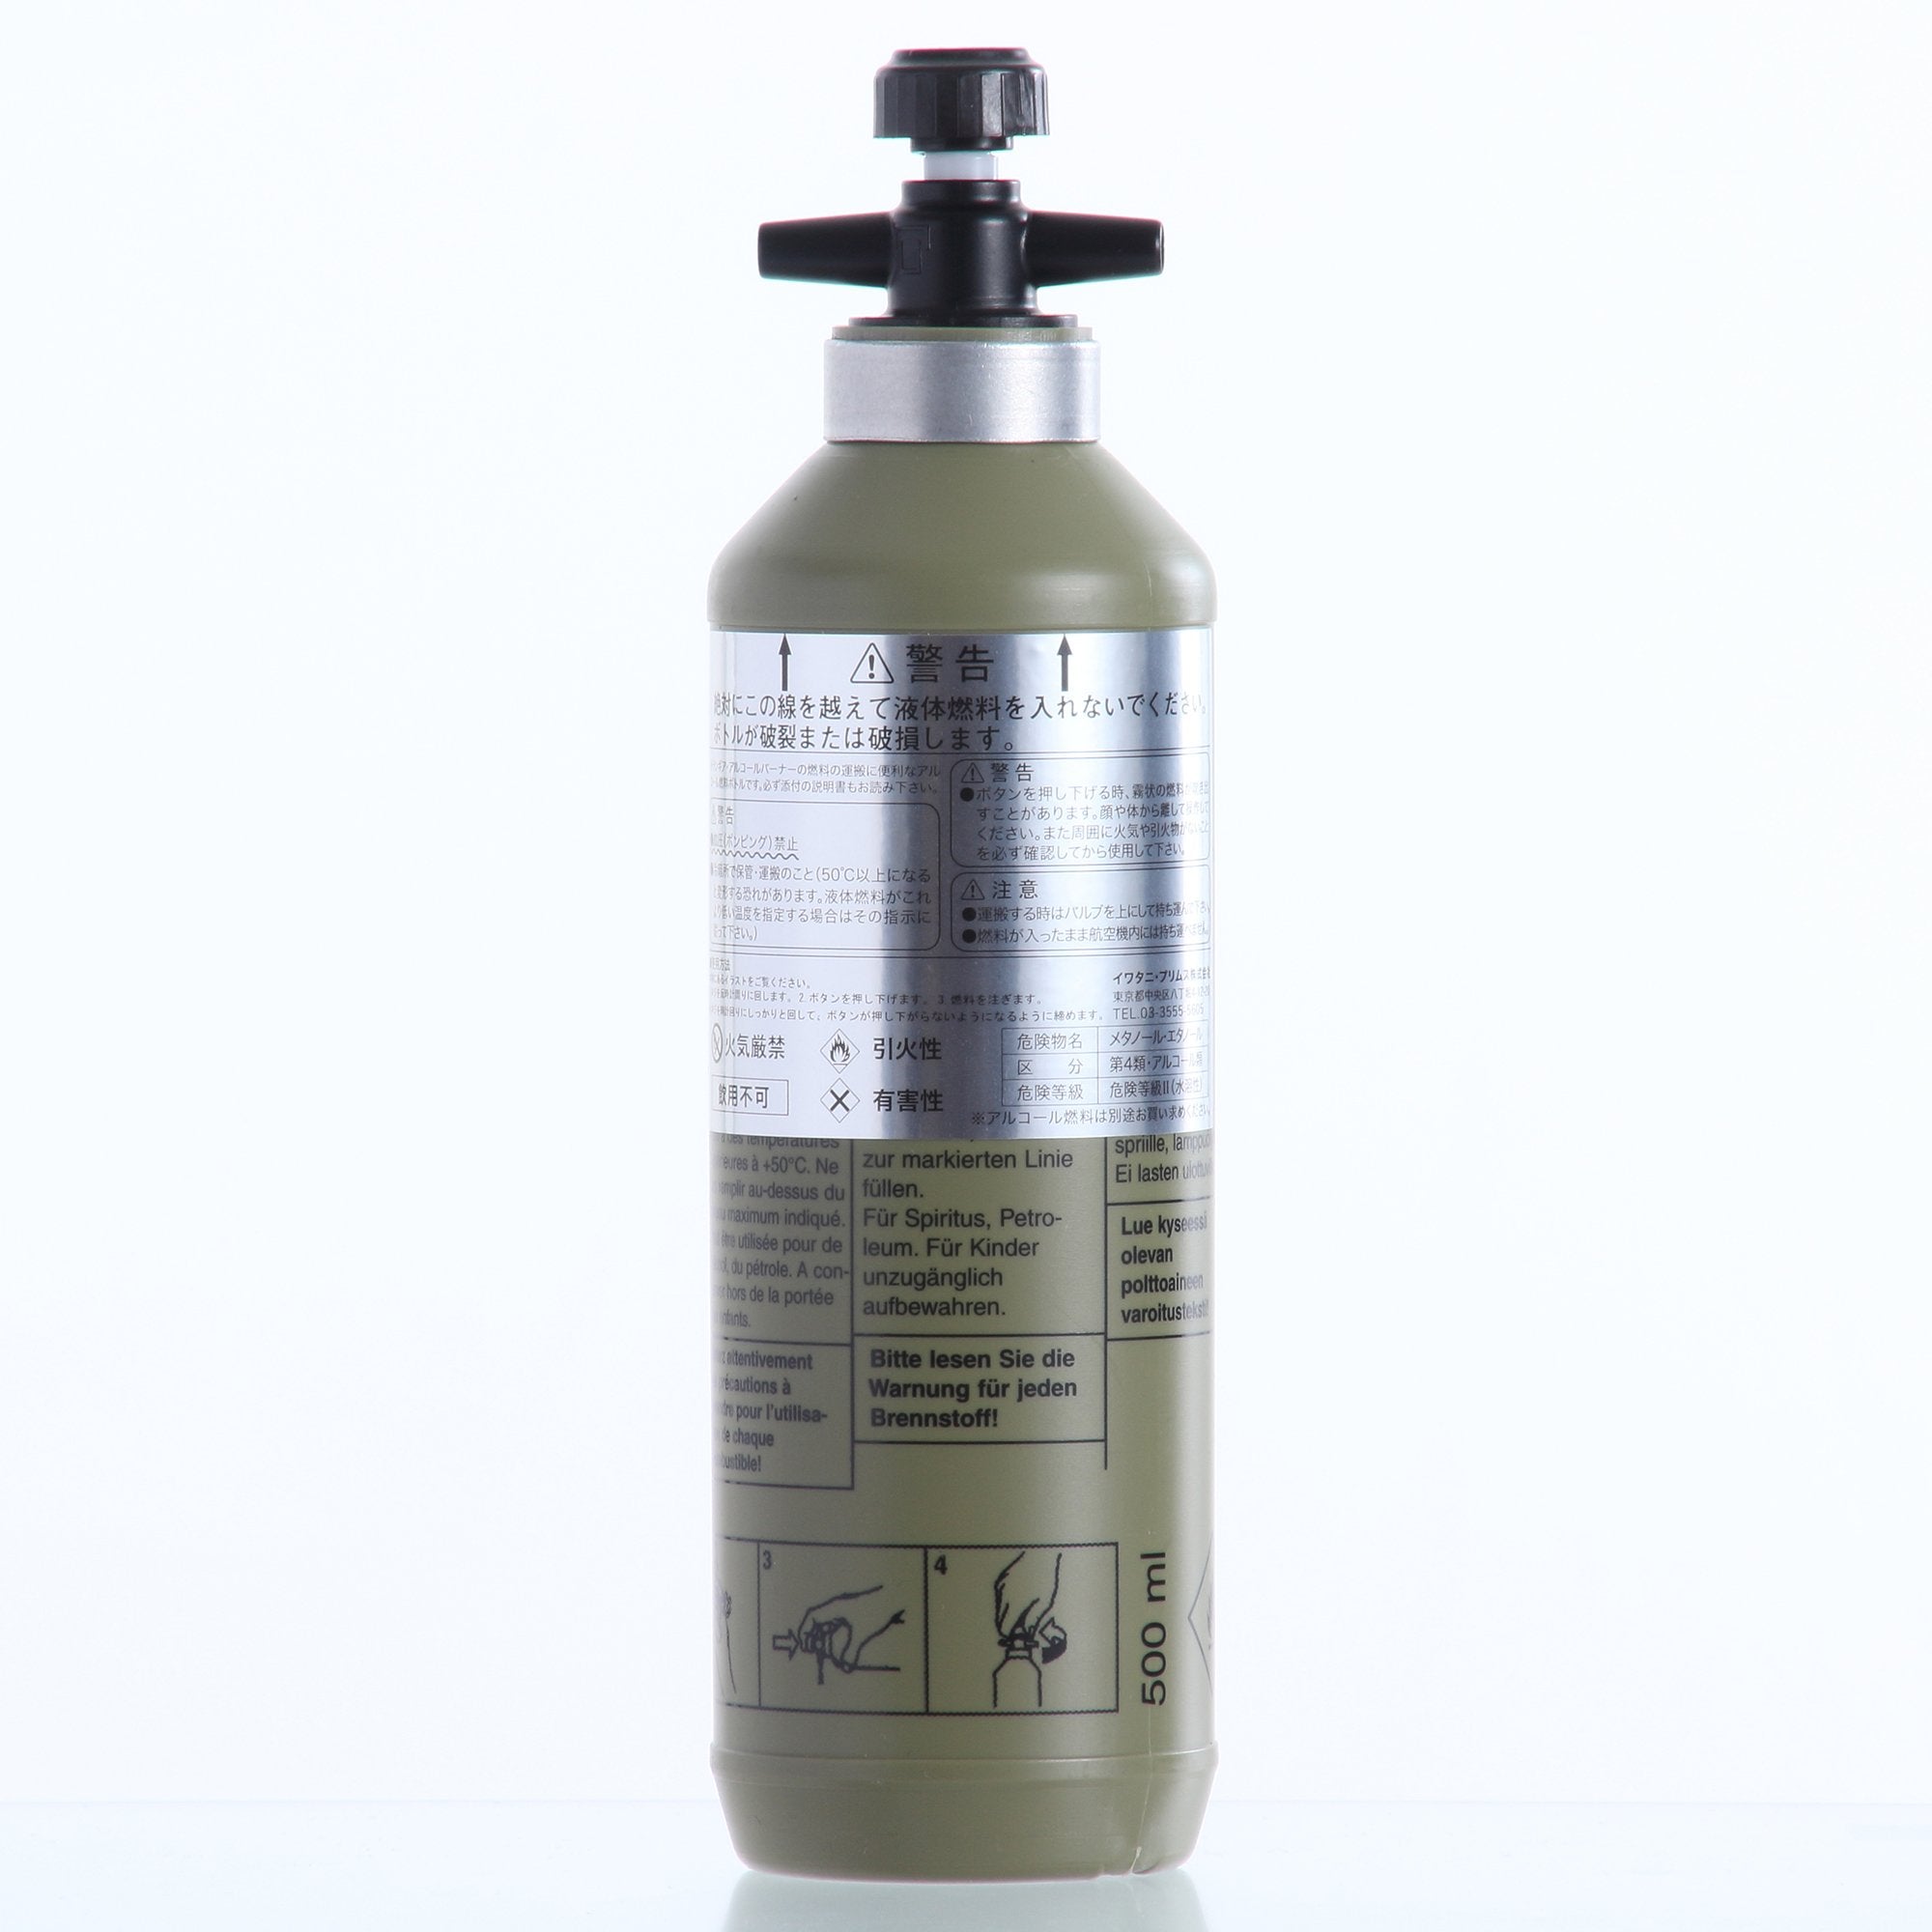 Trangia 0,5 l, Olivgrün Brennstoffflasche